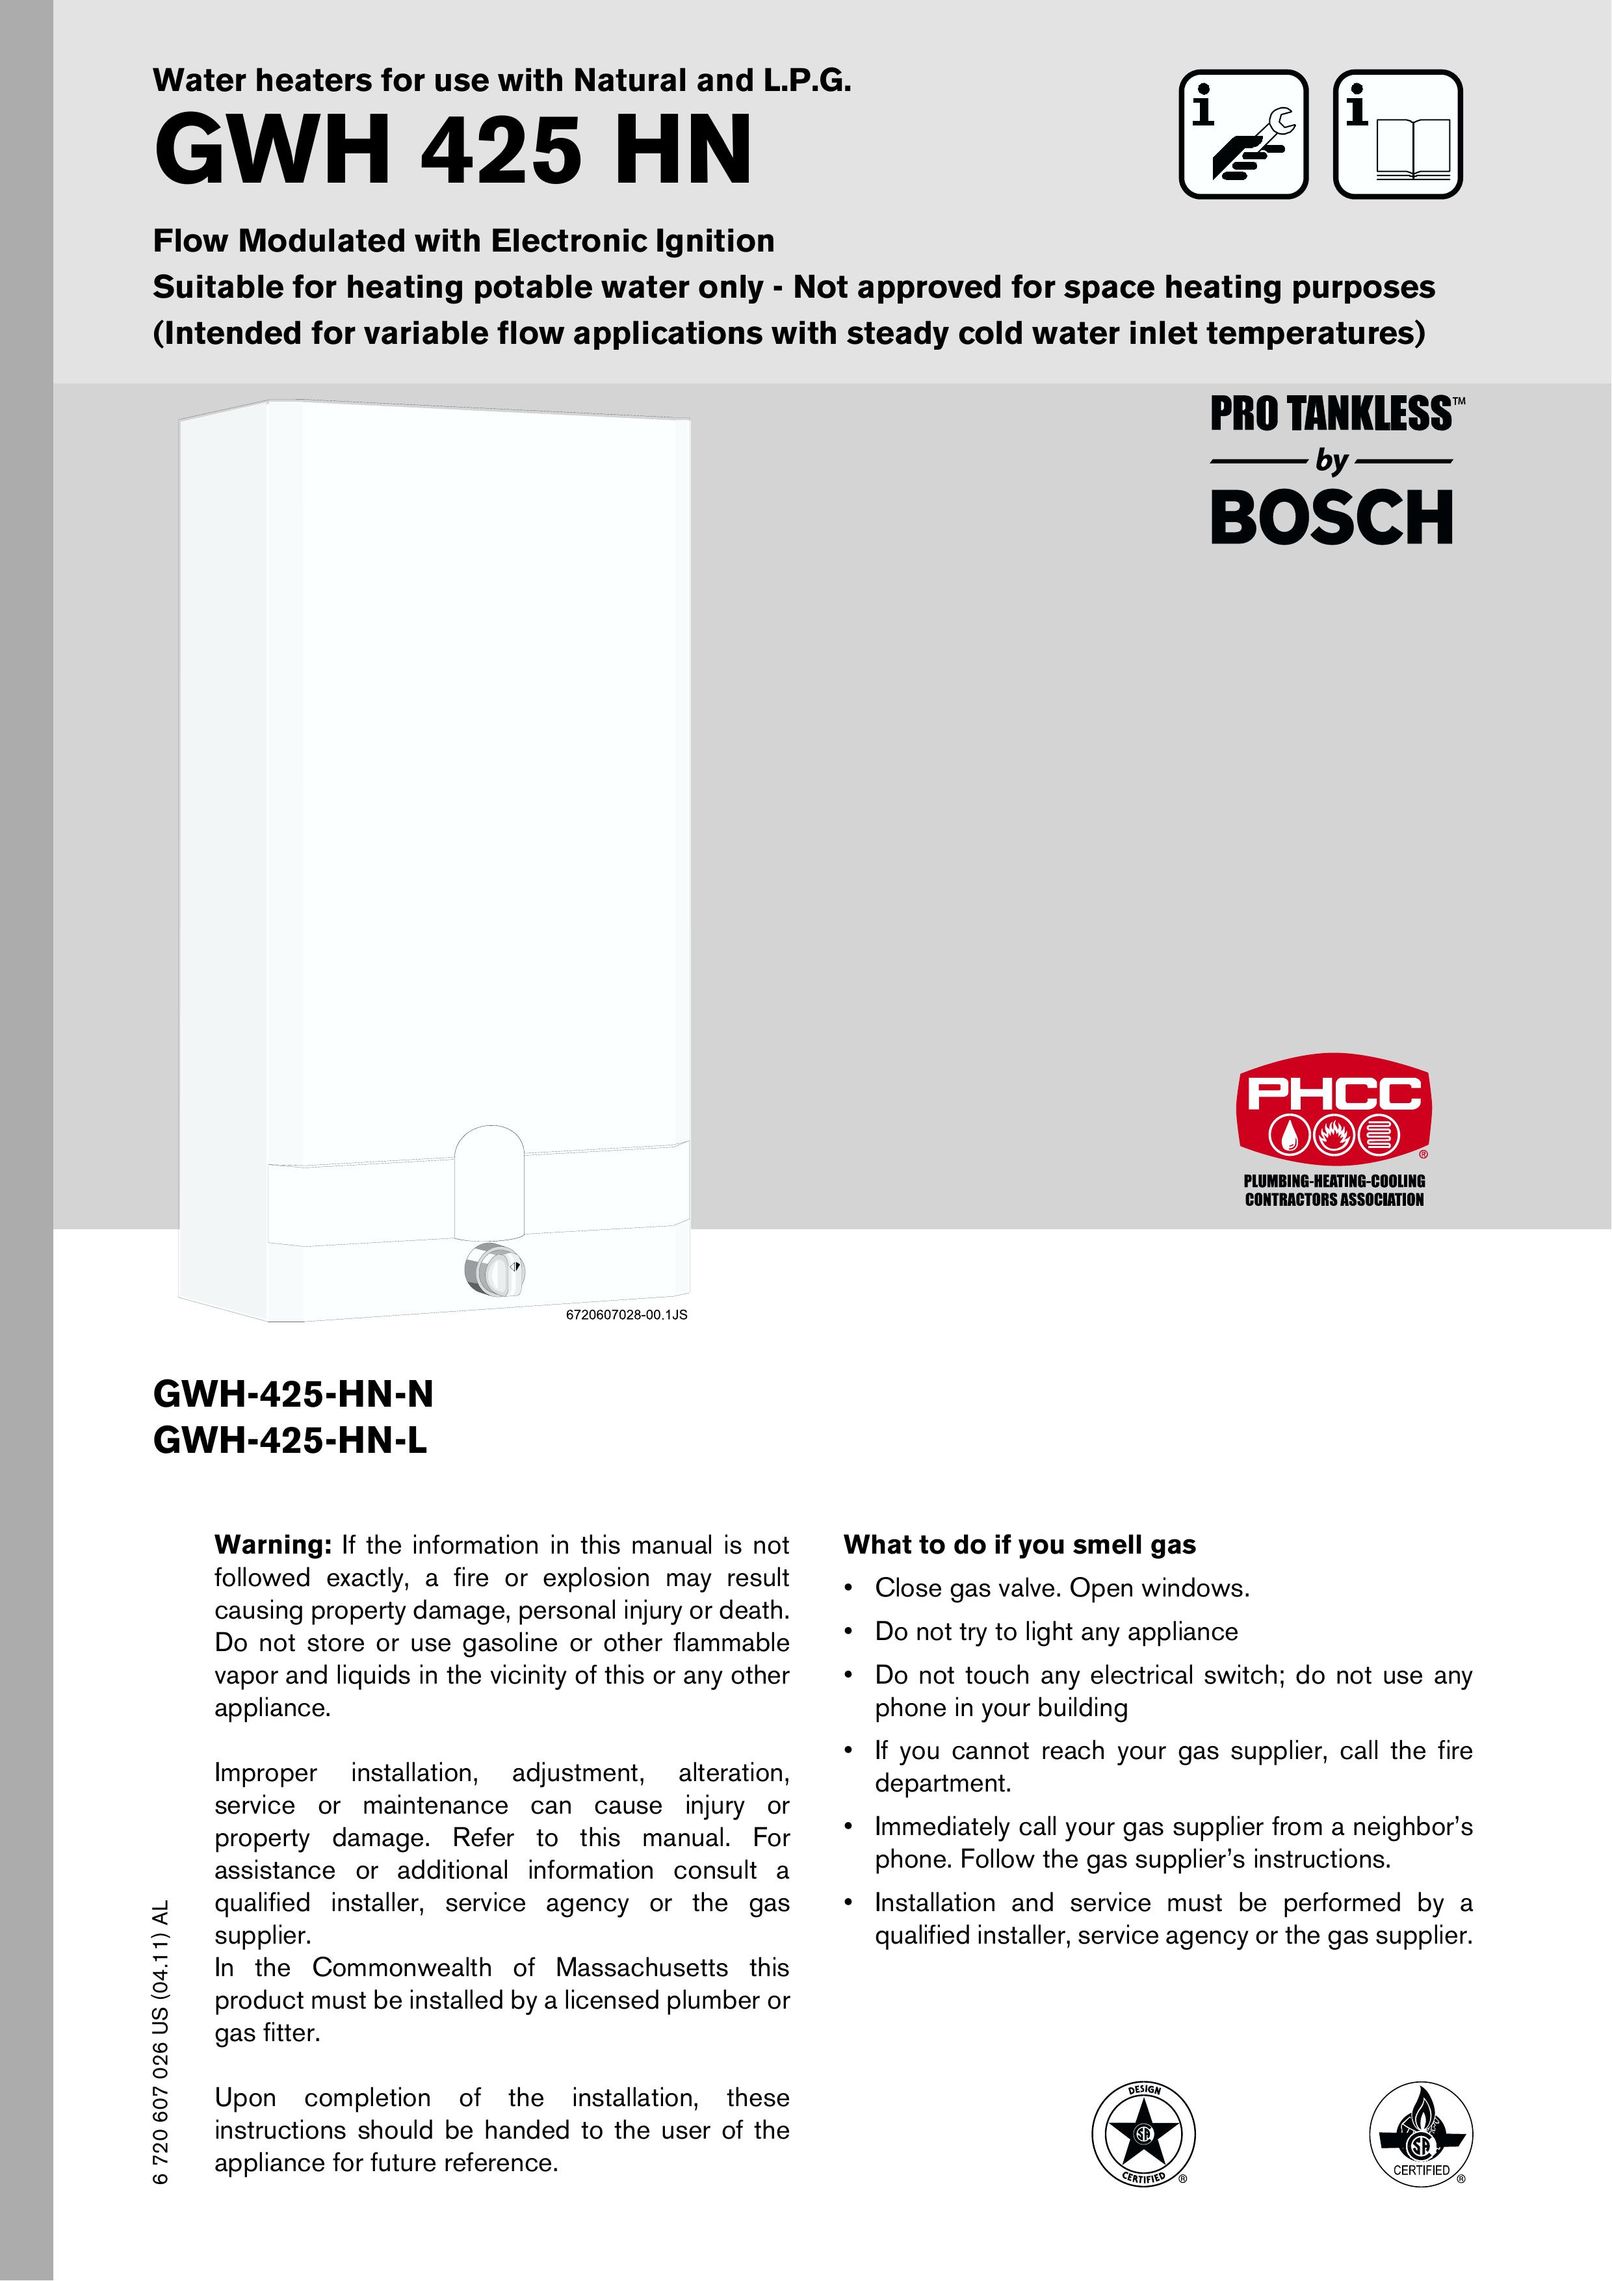 Bosch Appliances GWH-425-HN-N Water Heater User Manual